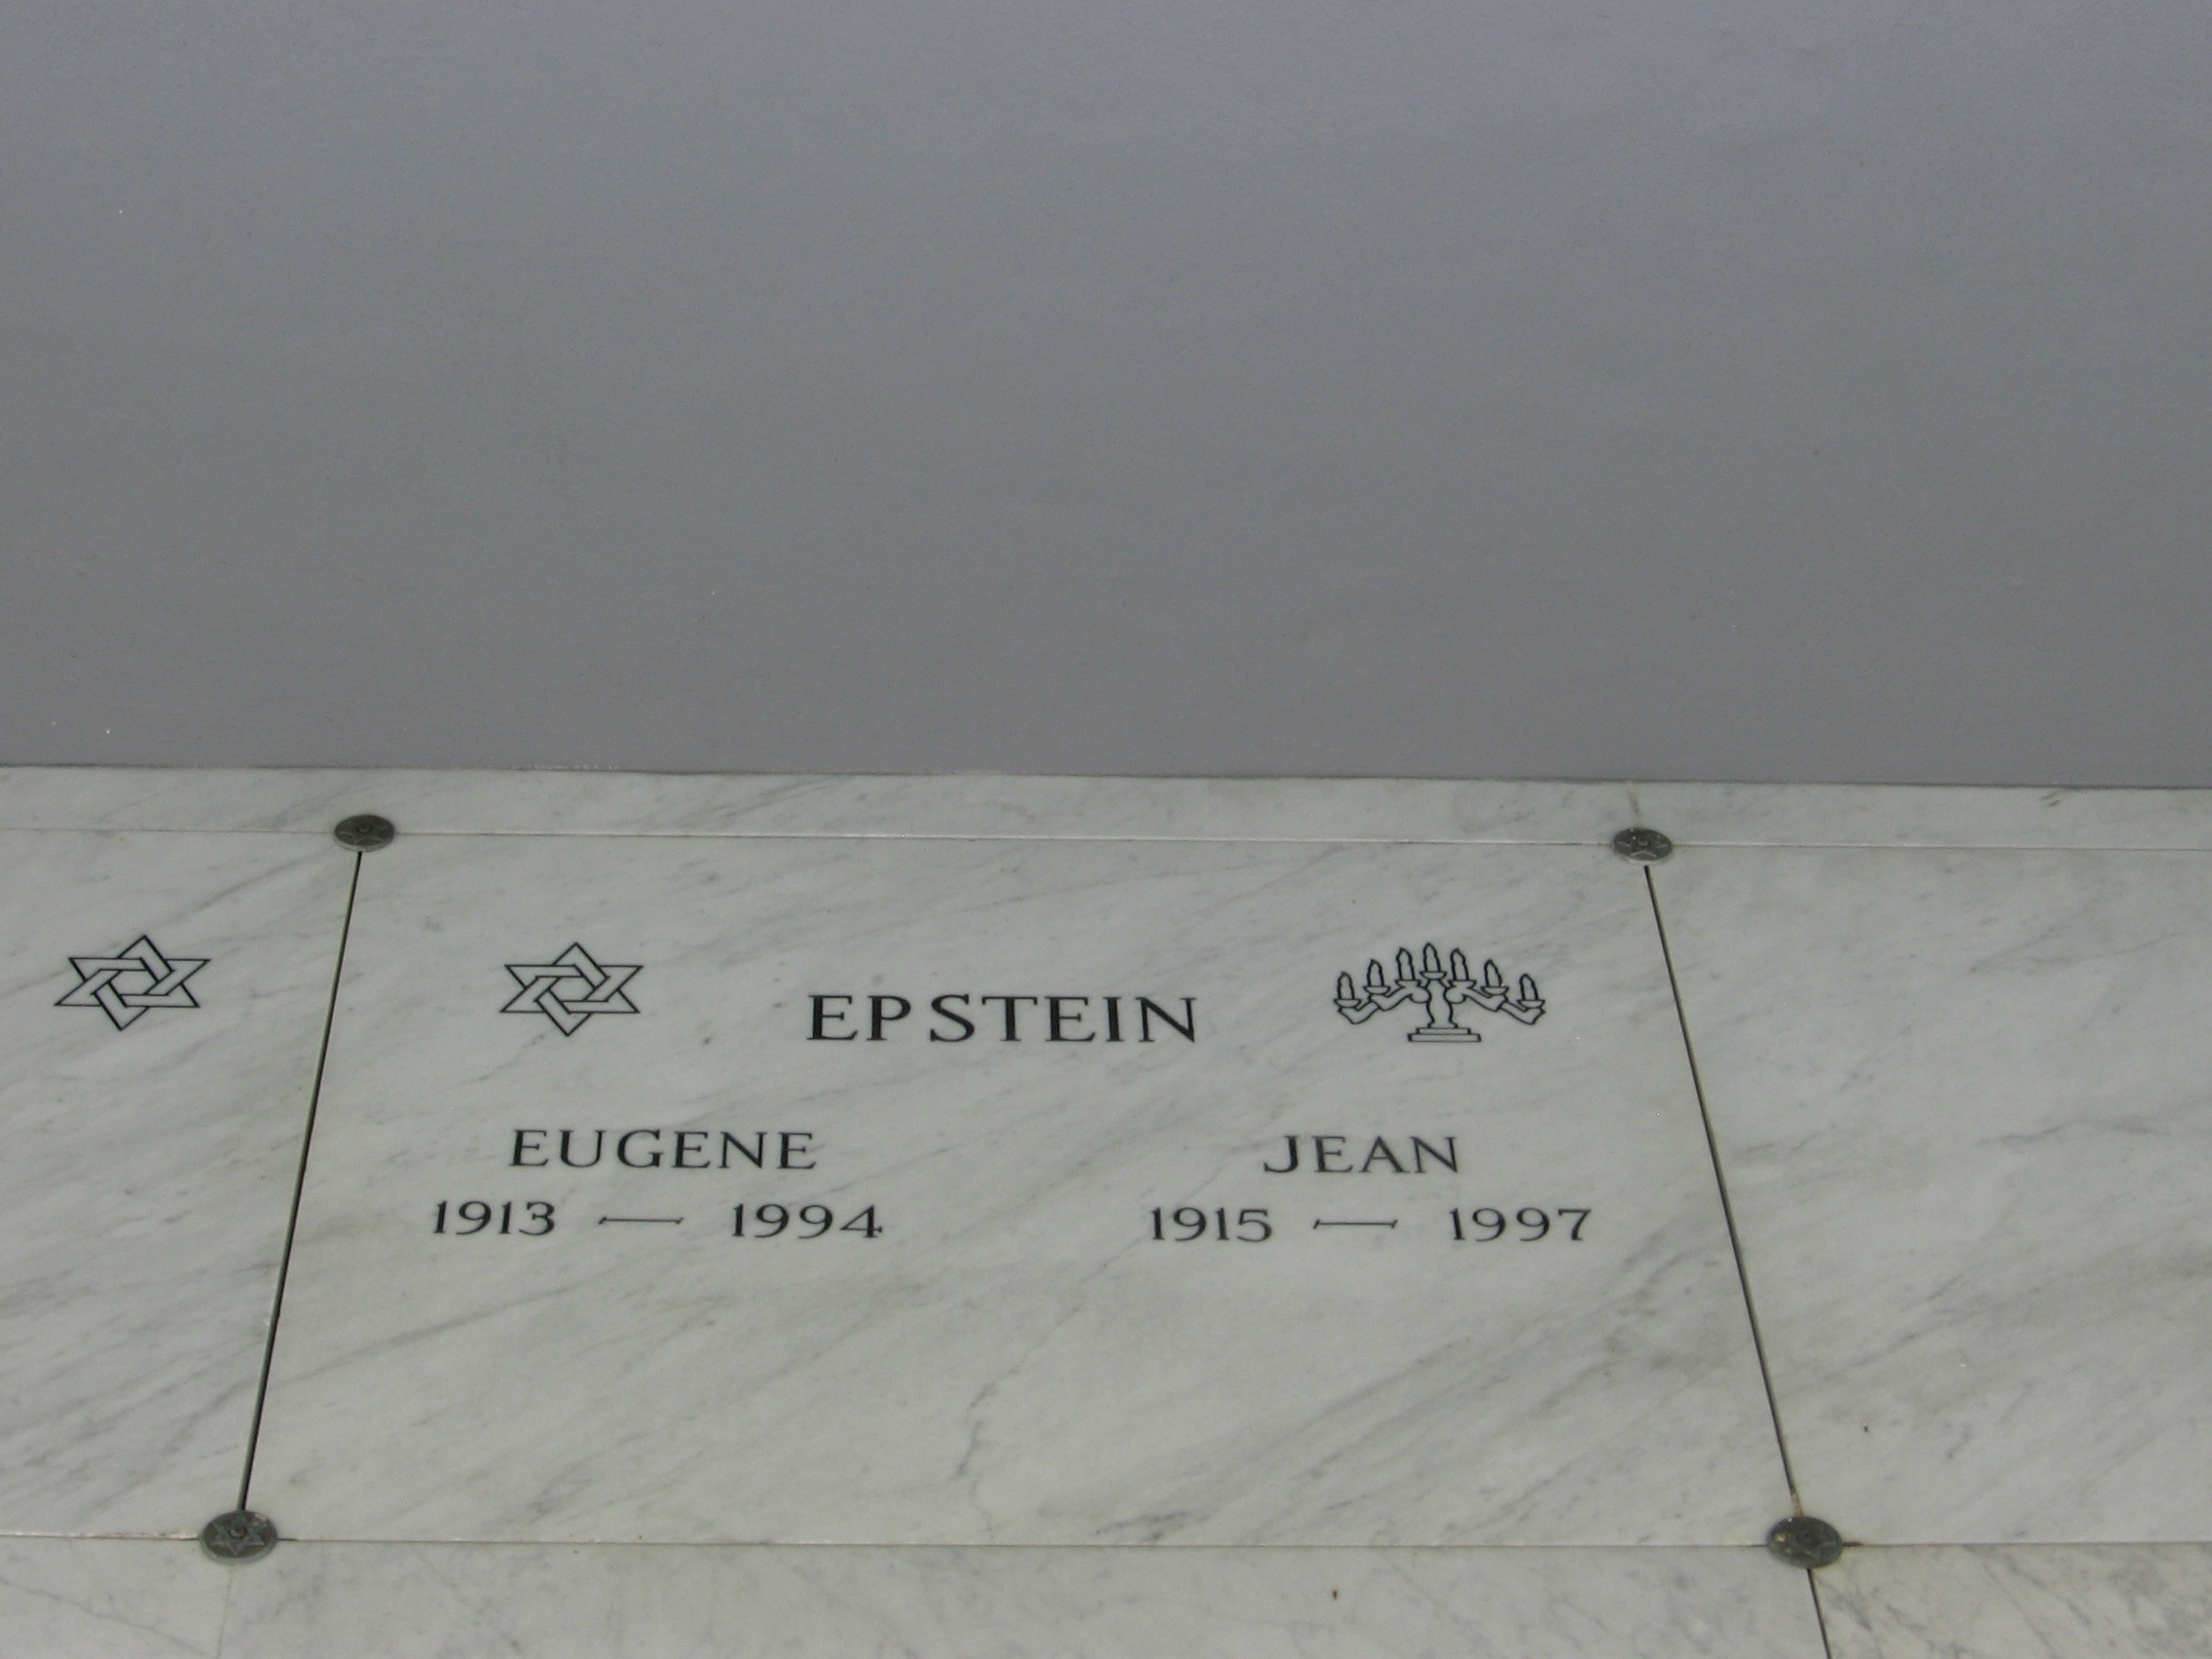 Eugene Epstein